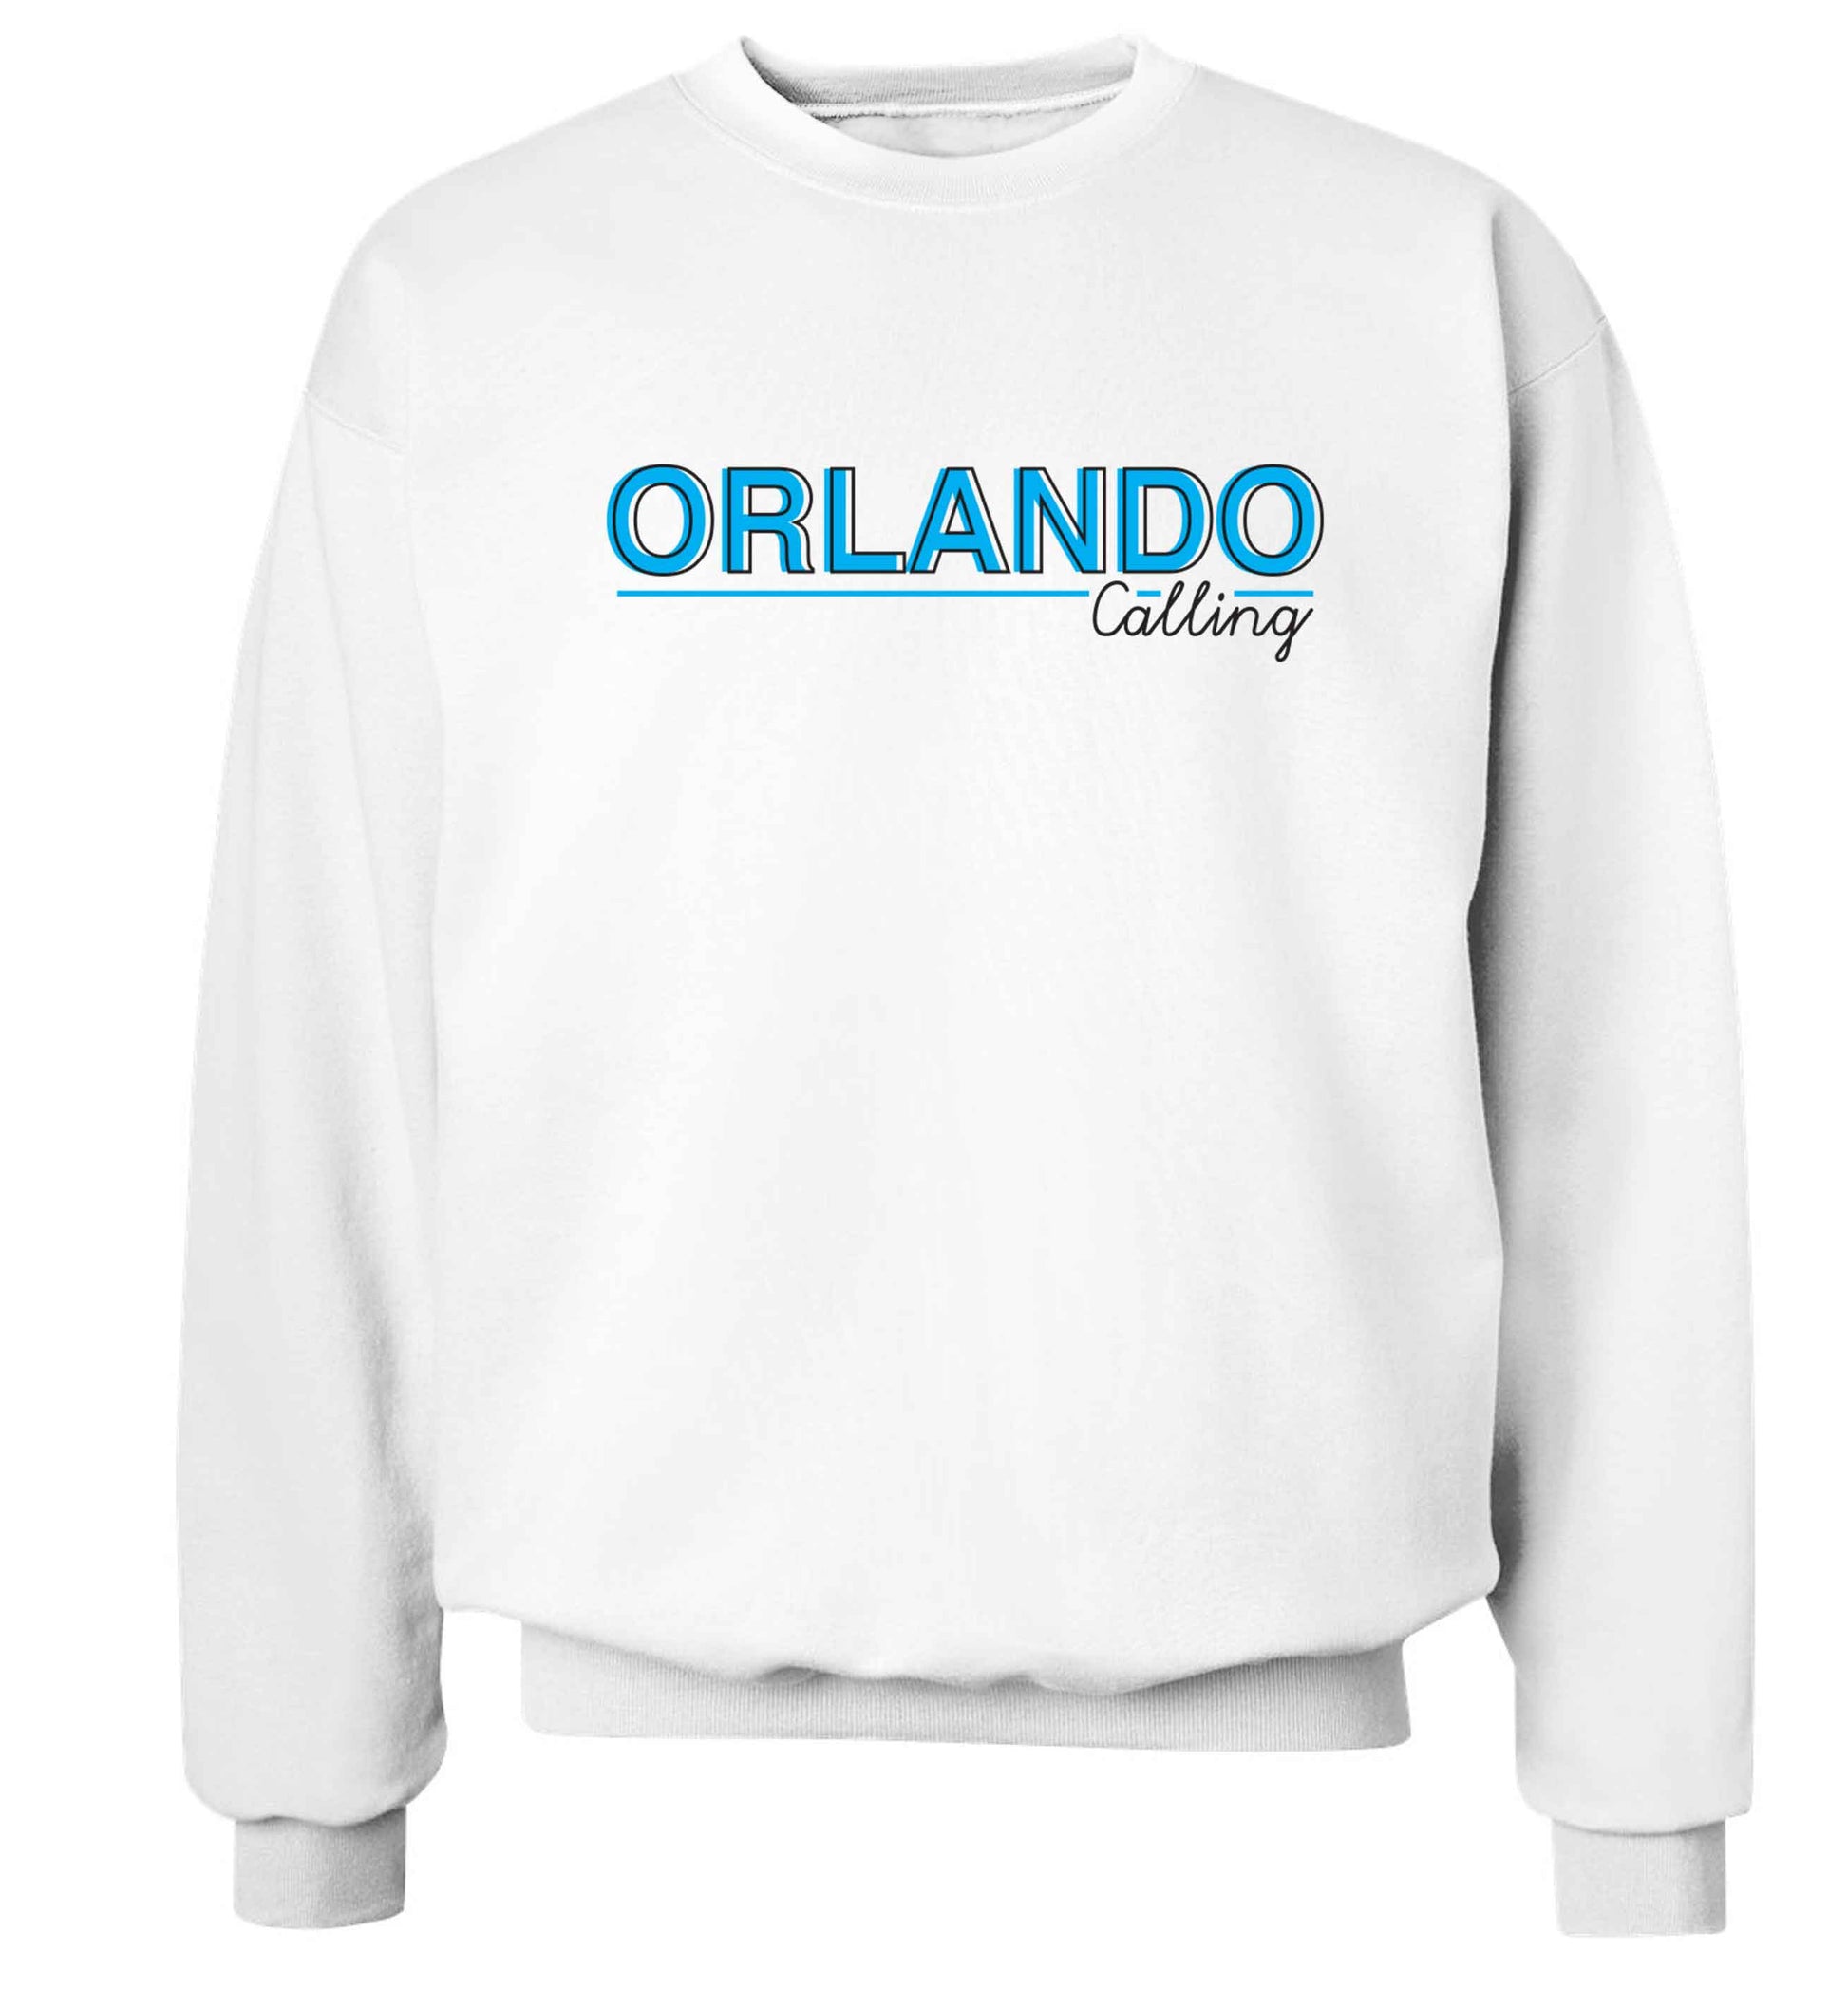 Orlando calling Adult's unisex white Sweater 2XL